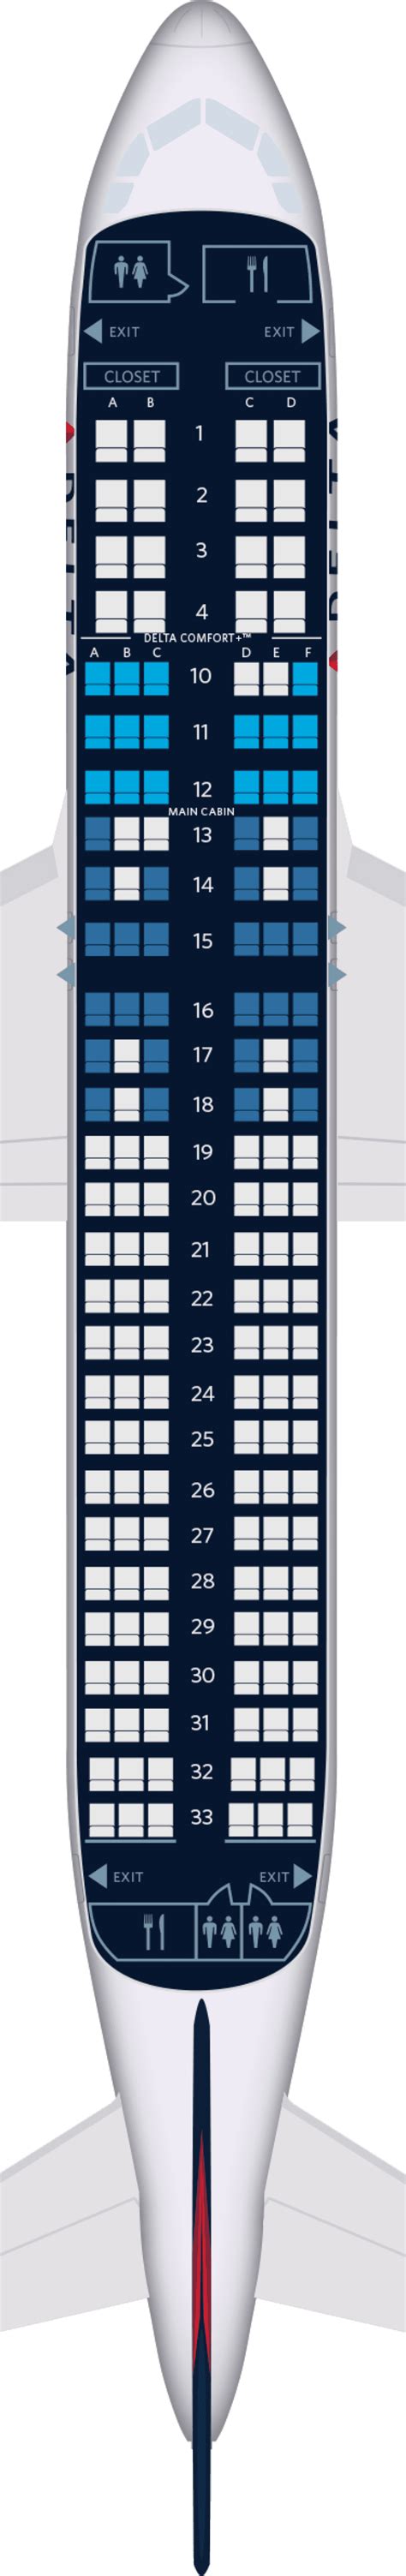 Austrian Airlines A320 Seat Map Seatguru Seat Map Czech Airlines